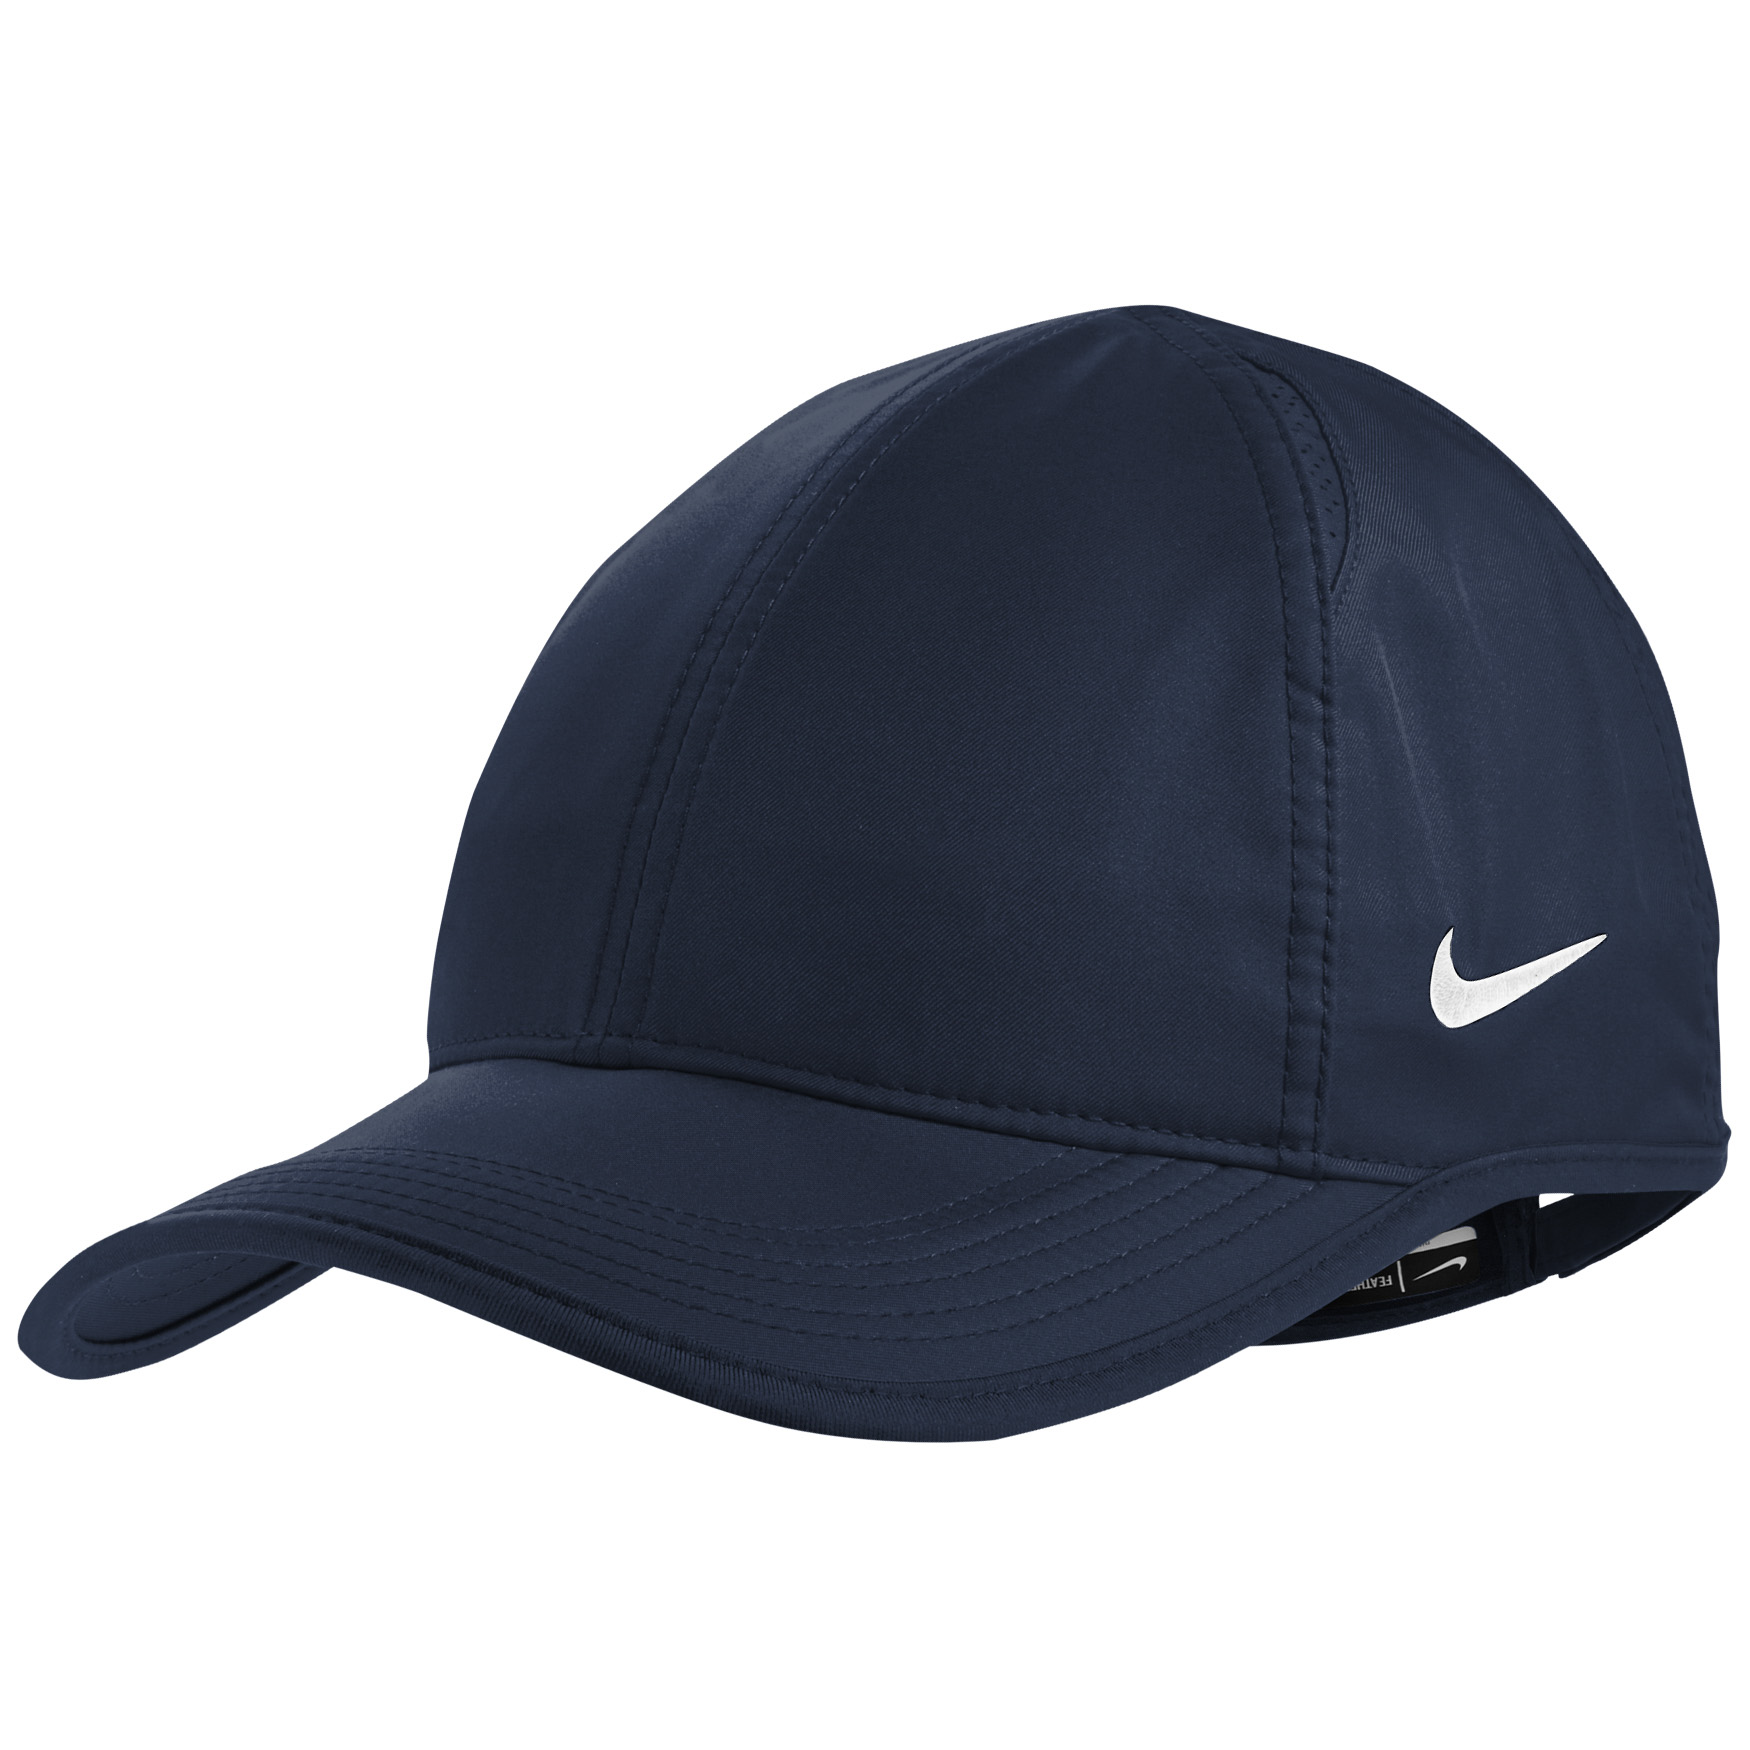 Wvu | West Virginia Nike Core Bucket Hat | Alumni Hall